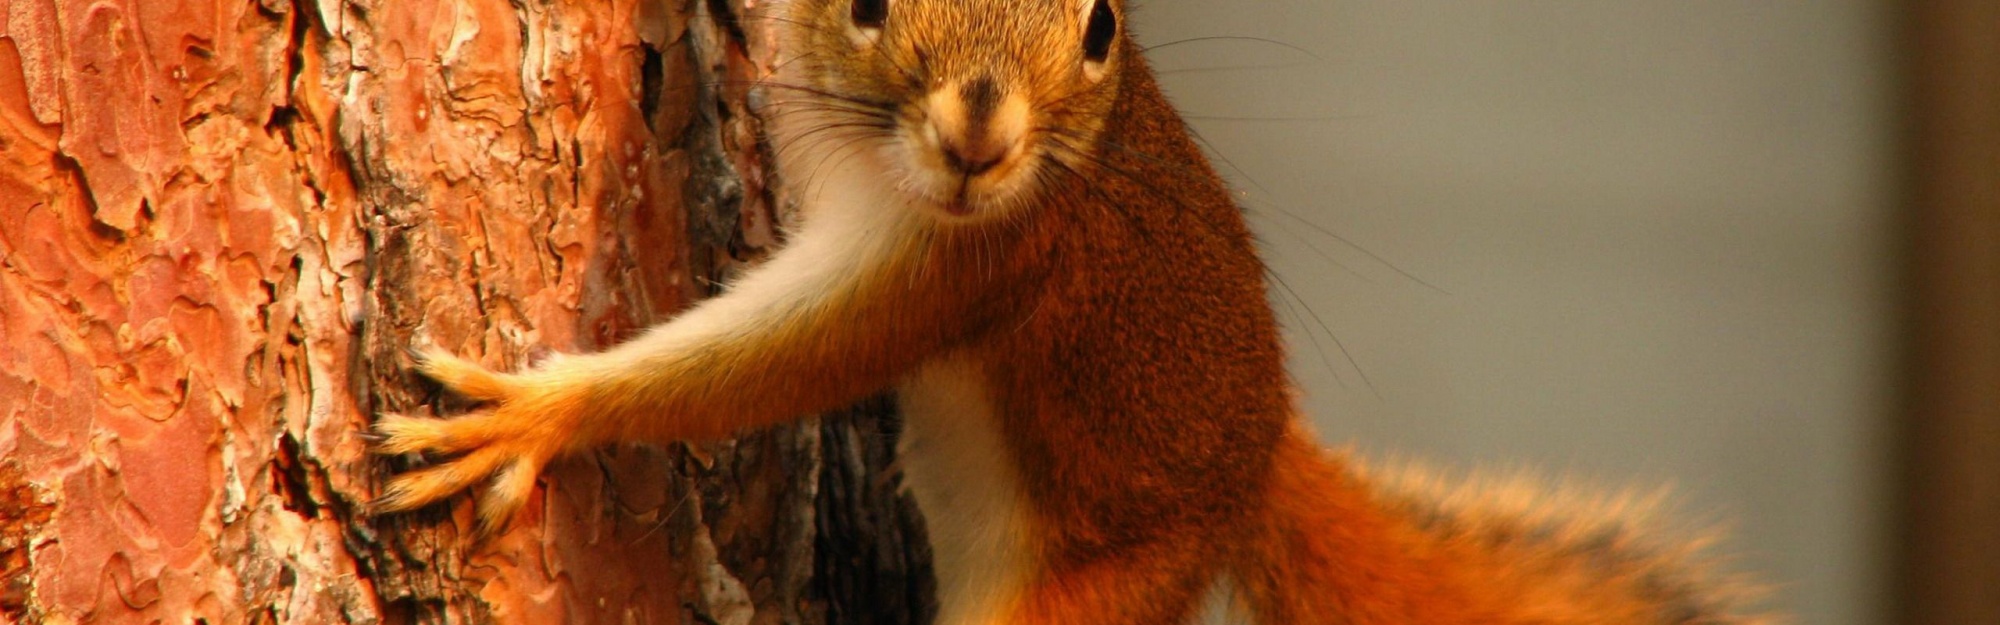 Squirrel On Tree